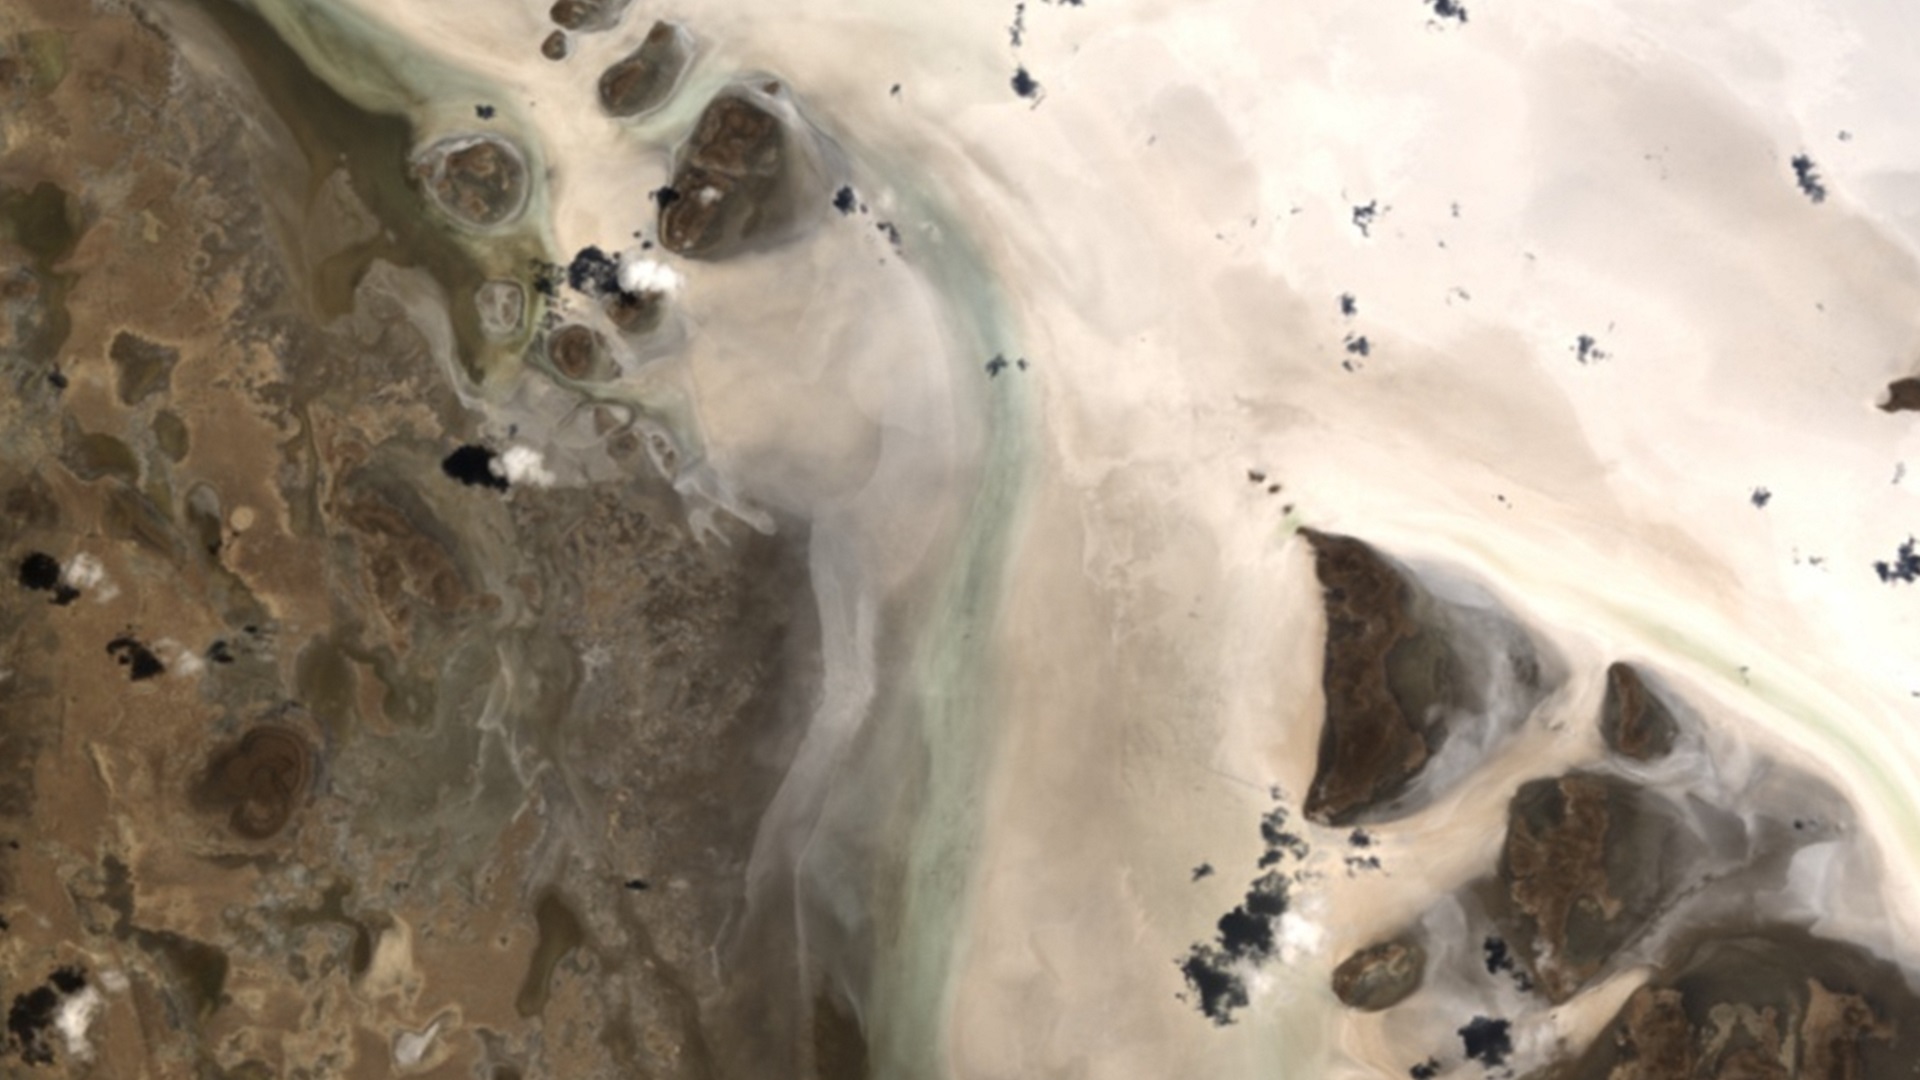 The Bolivian salt desert from space